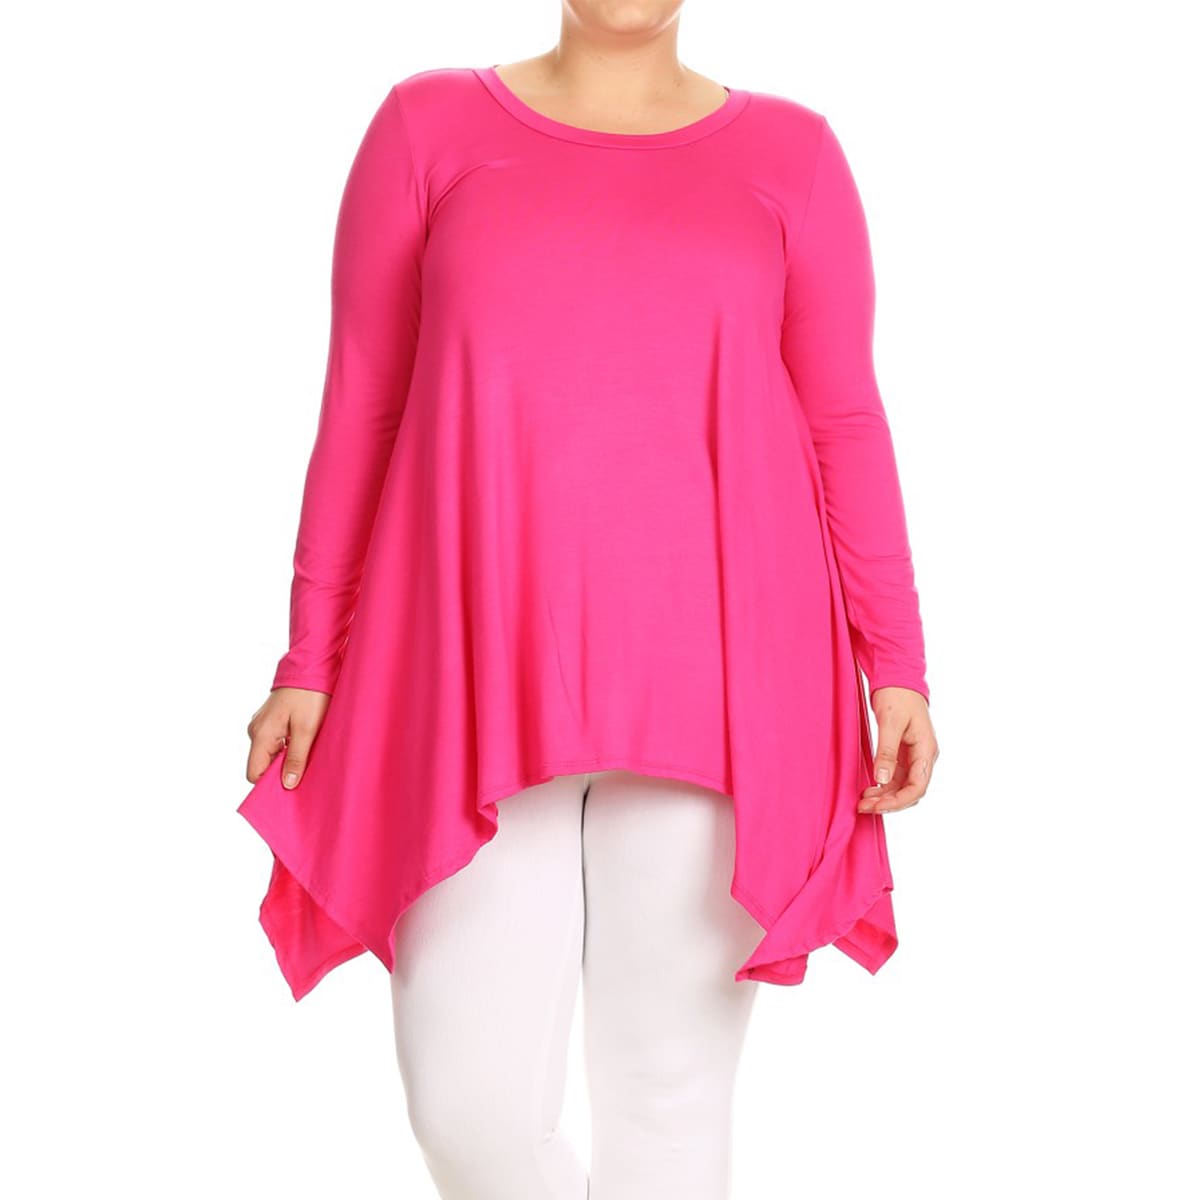 pink clothing plus size